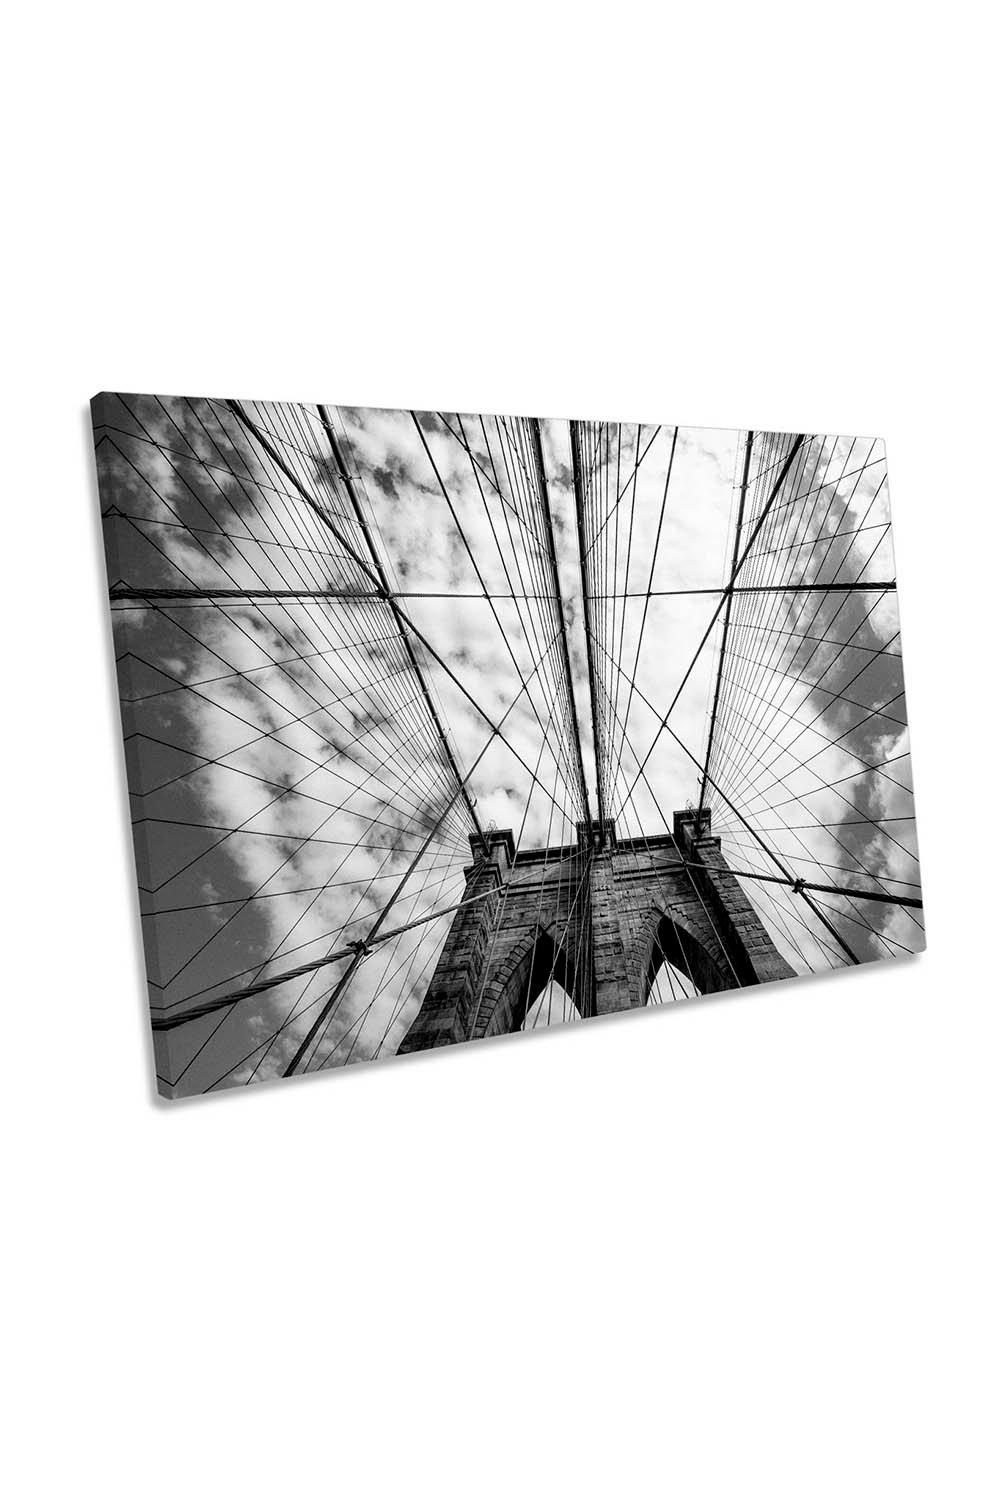 Brooklyn Bridge New York City Black and White Canvas Wall Art Picture Print